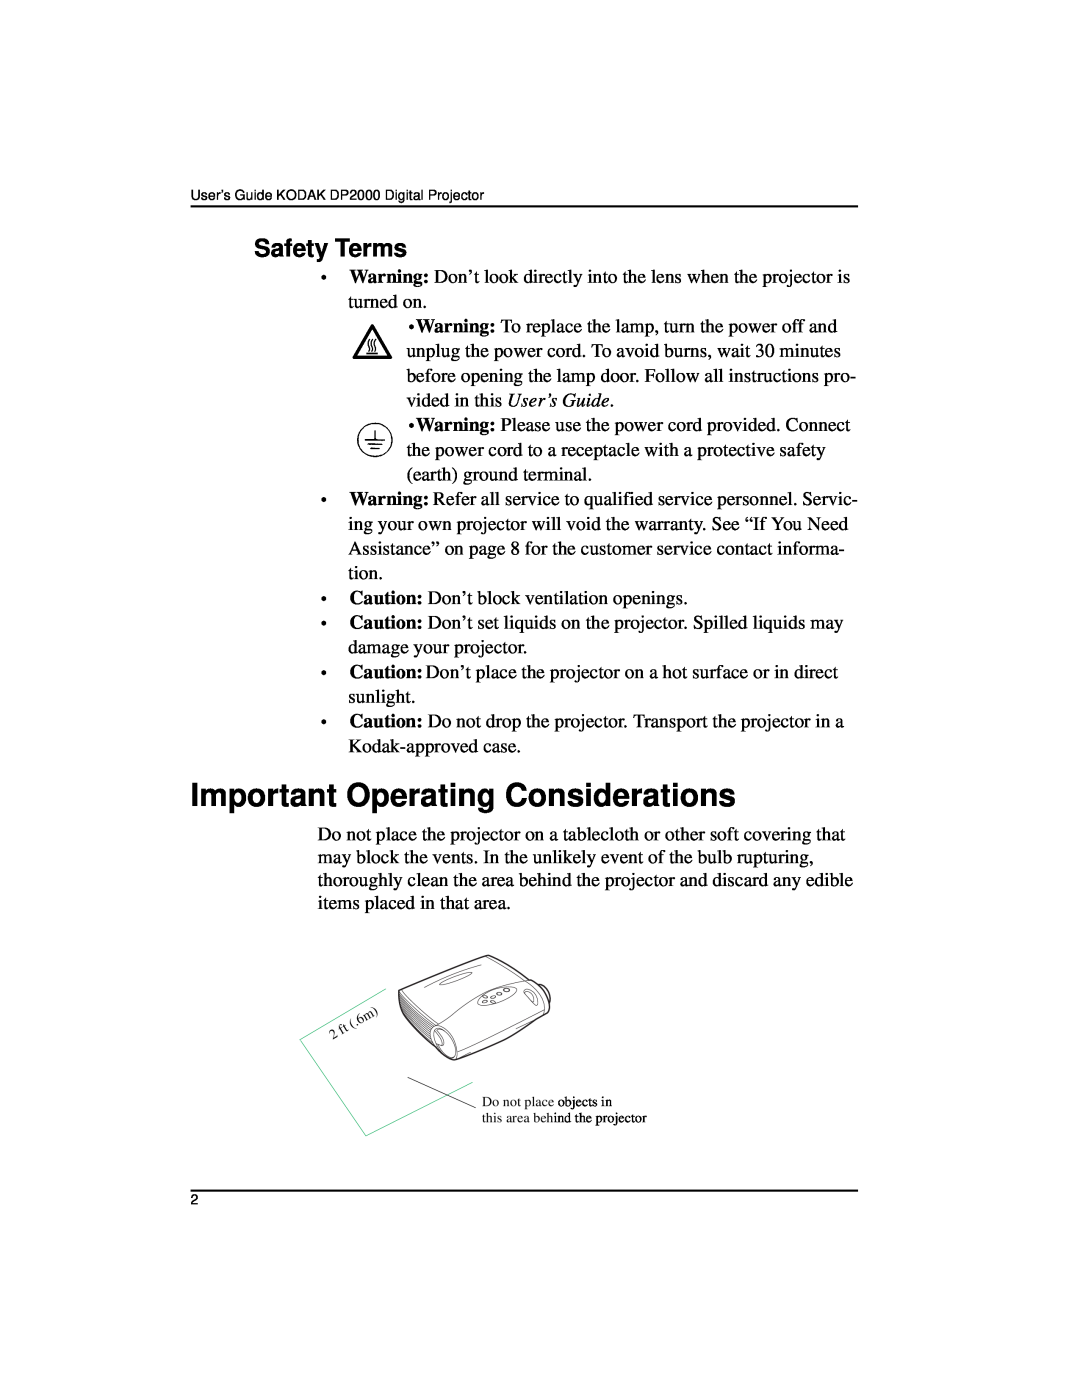 Kodak DP2000 manual Important Operating Considerations, Safety Terms 